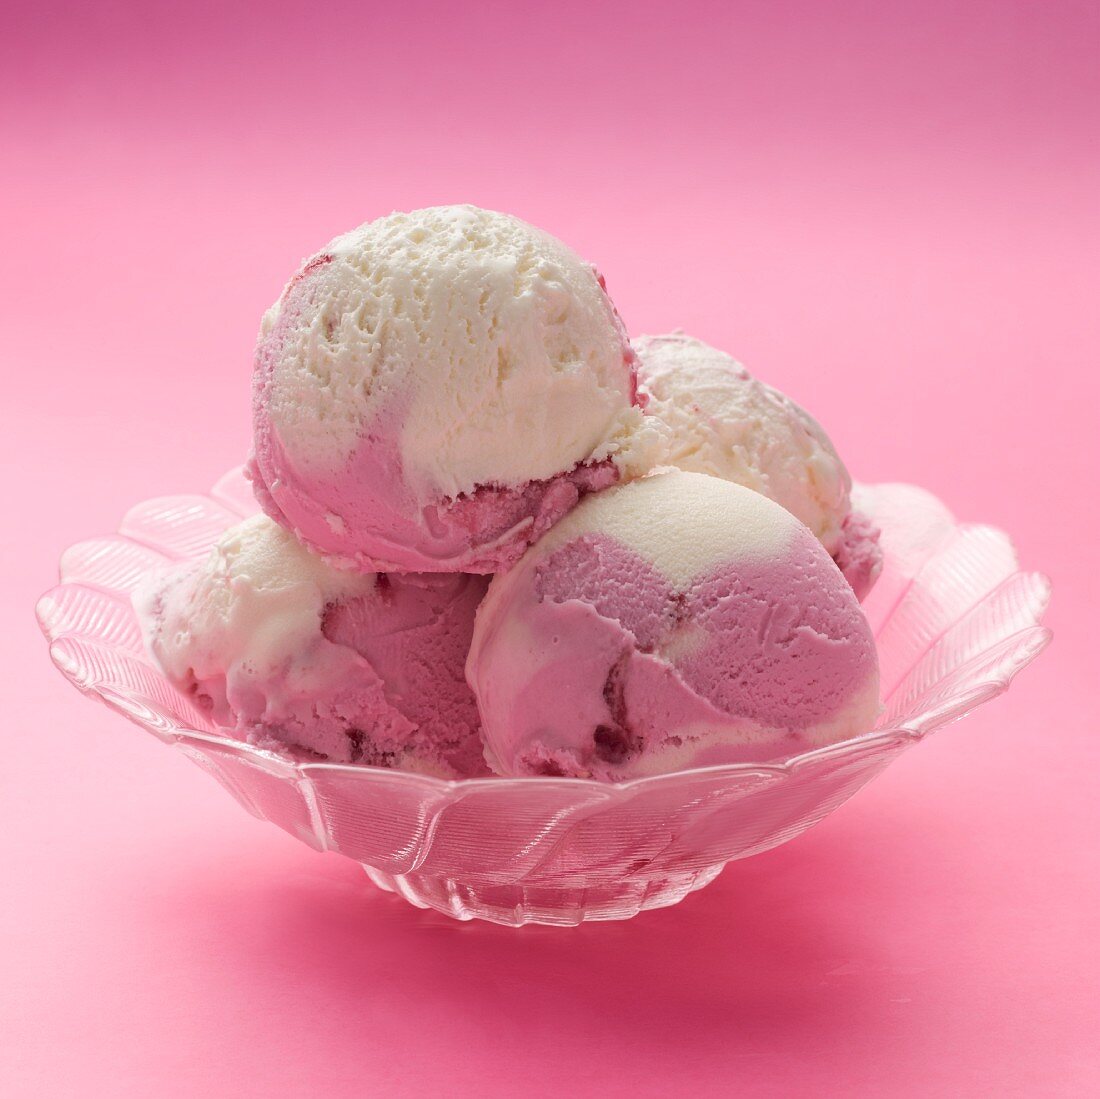 Raspberry and vanilla ice cream in a glass bowl